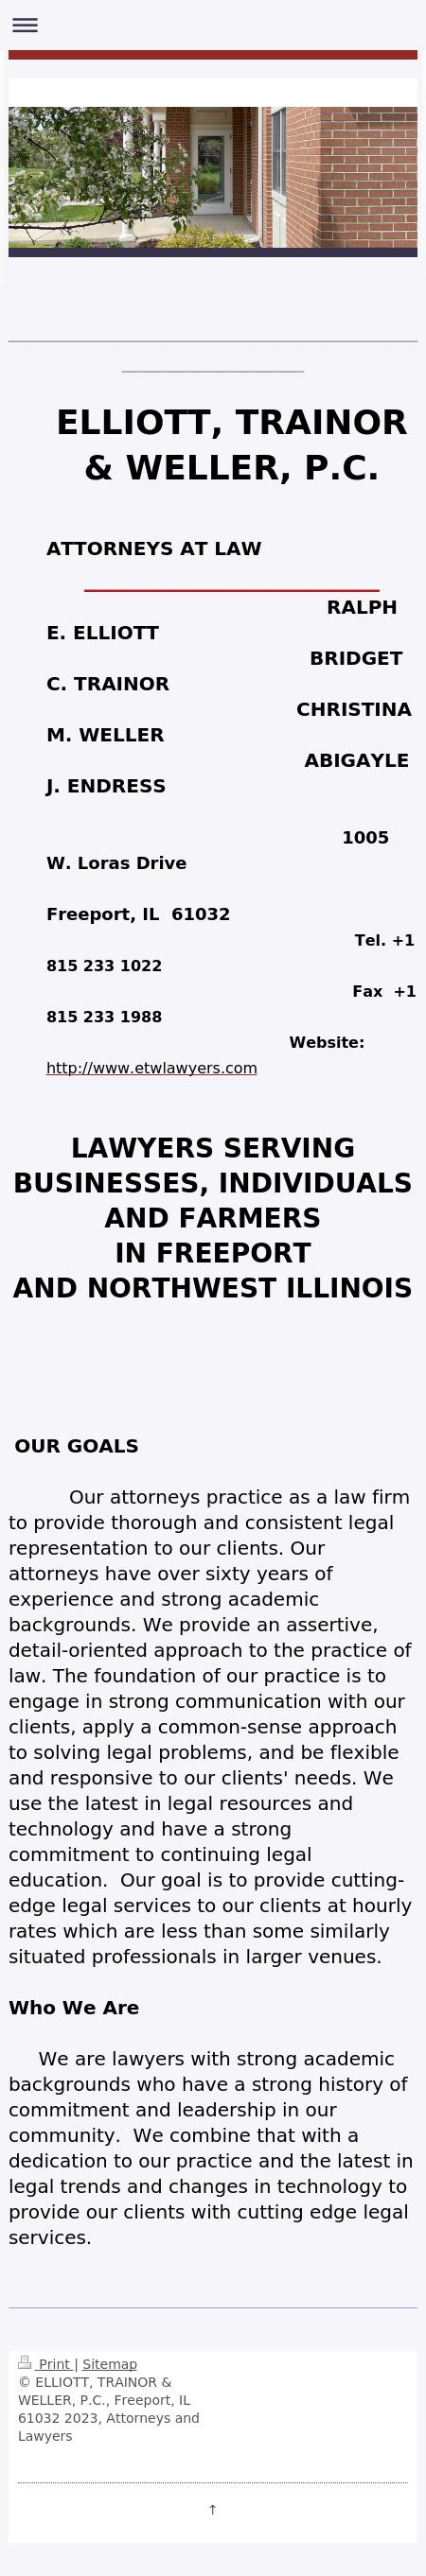 Elliott & Trainor, P.C., Attorneys At Law - Freeport IL Lawyers